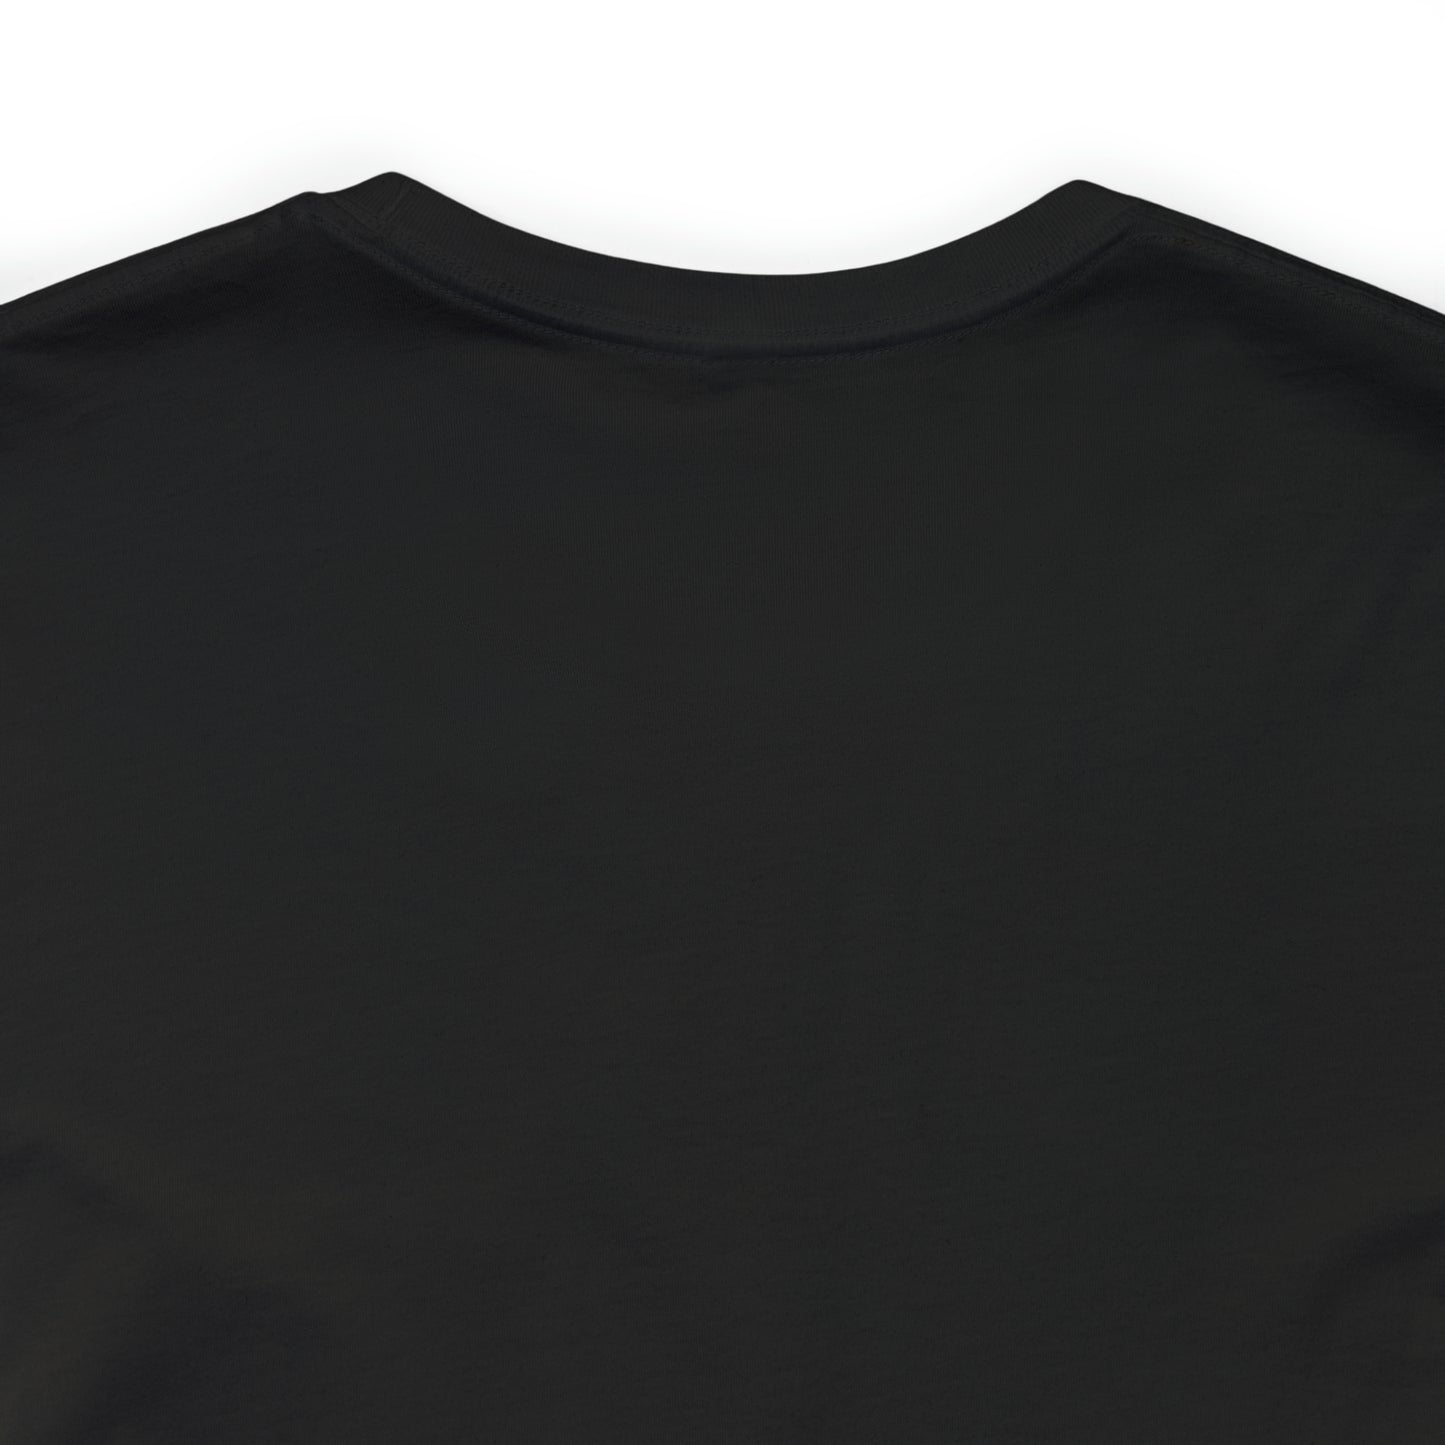 Mashpee, Mass Pickleball Short Sleeve T-Shirt